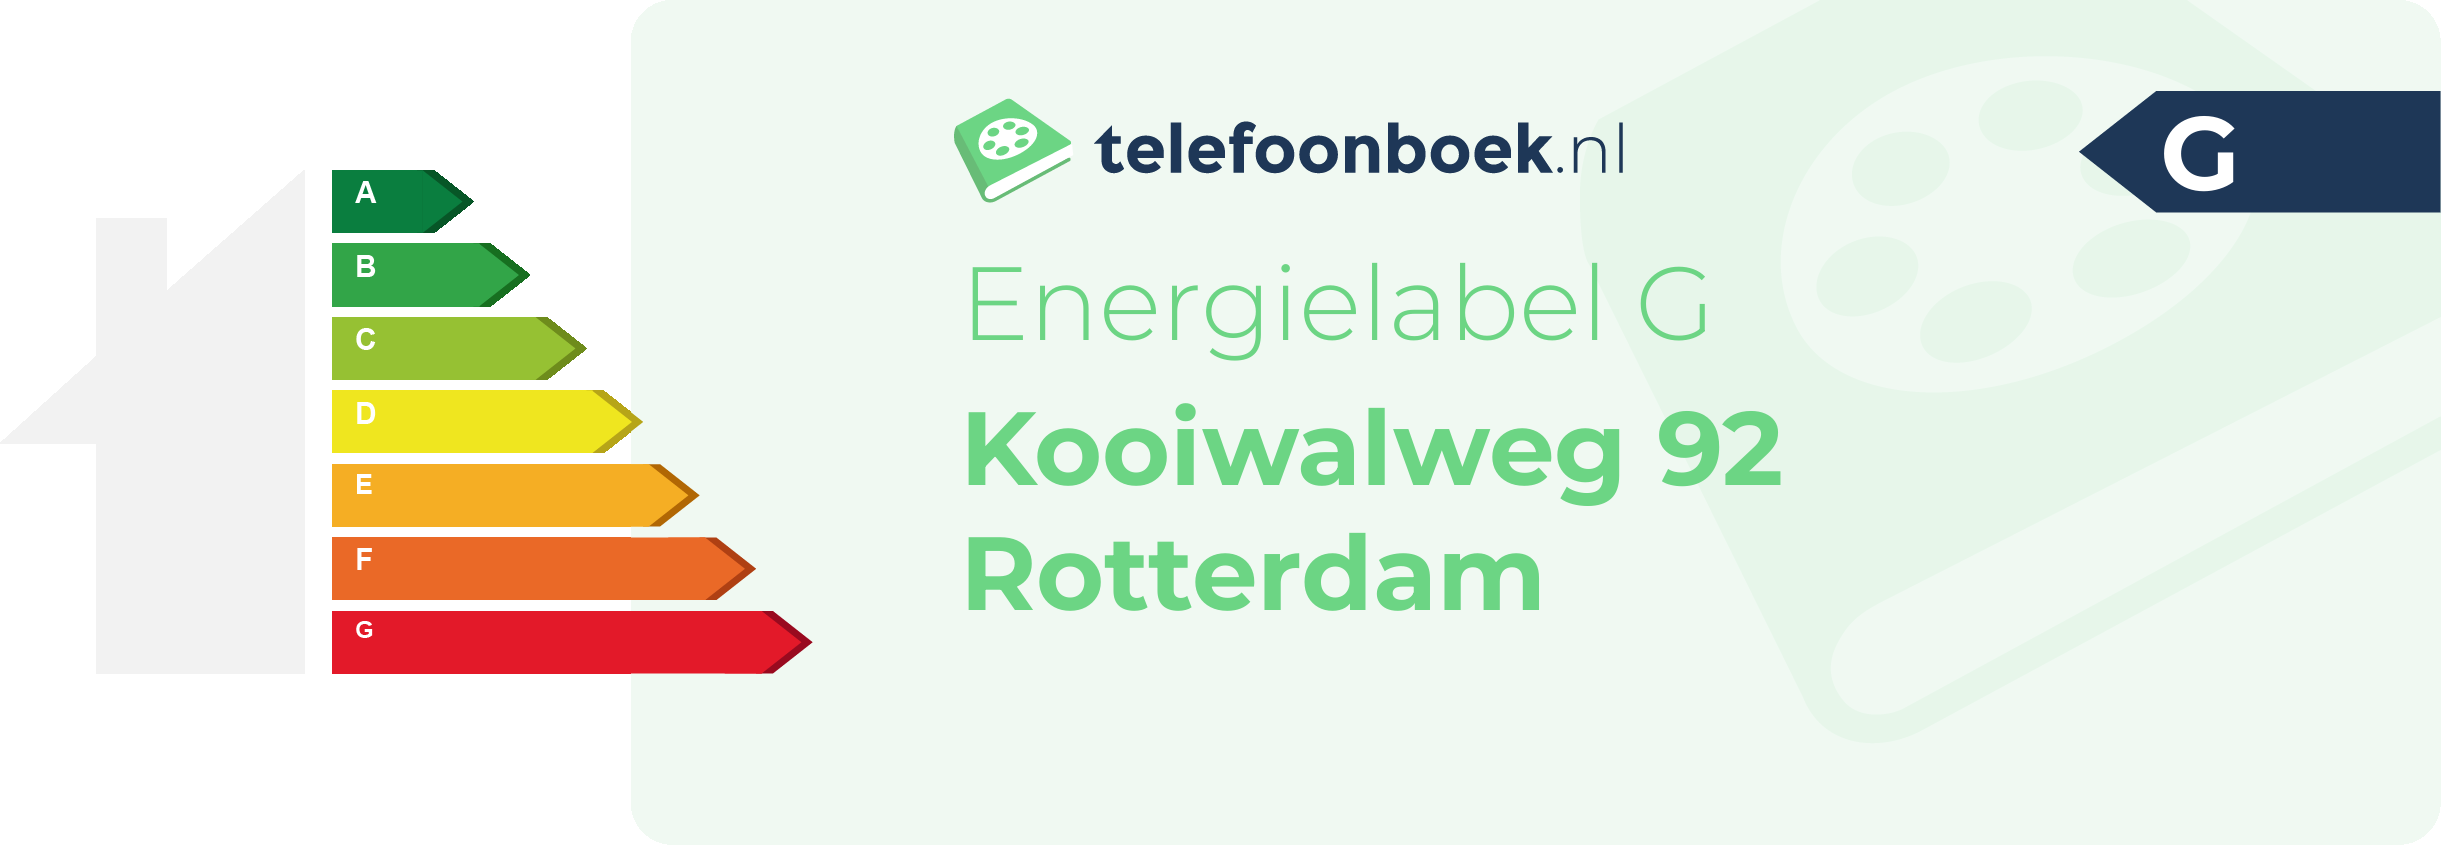 Energielabel Kooiwalweg 92 Rotterdam